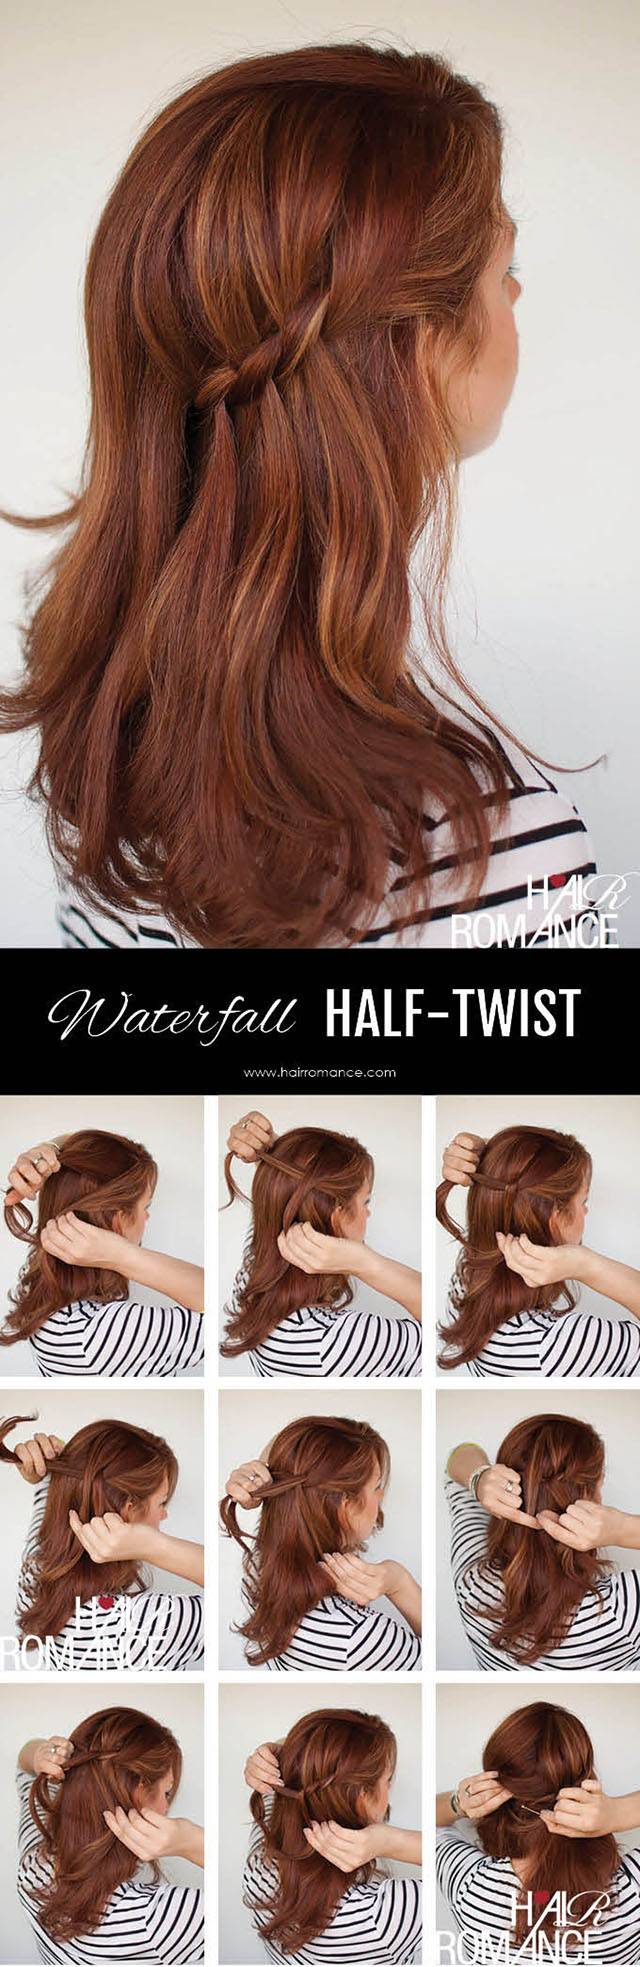 Hair Romance - waterfall half twist tutorial 5; adelady